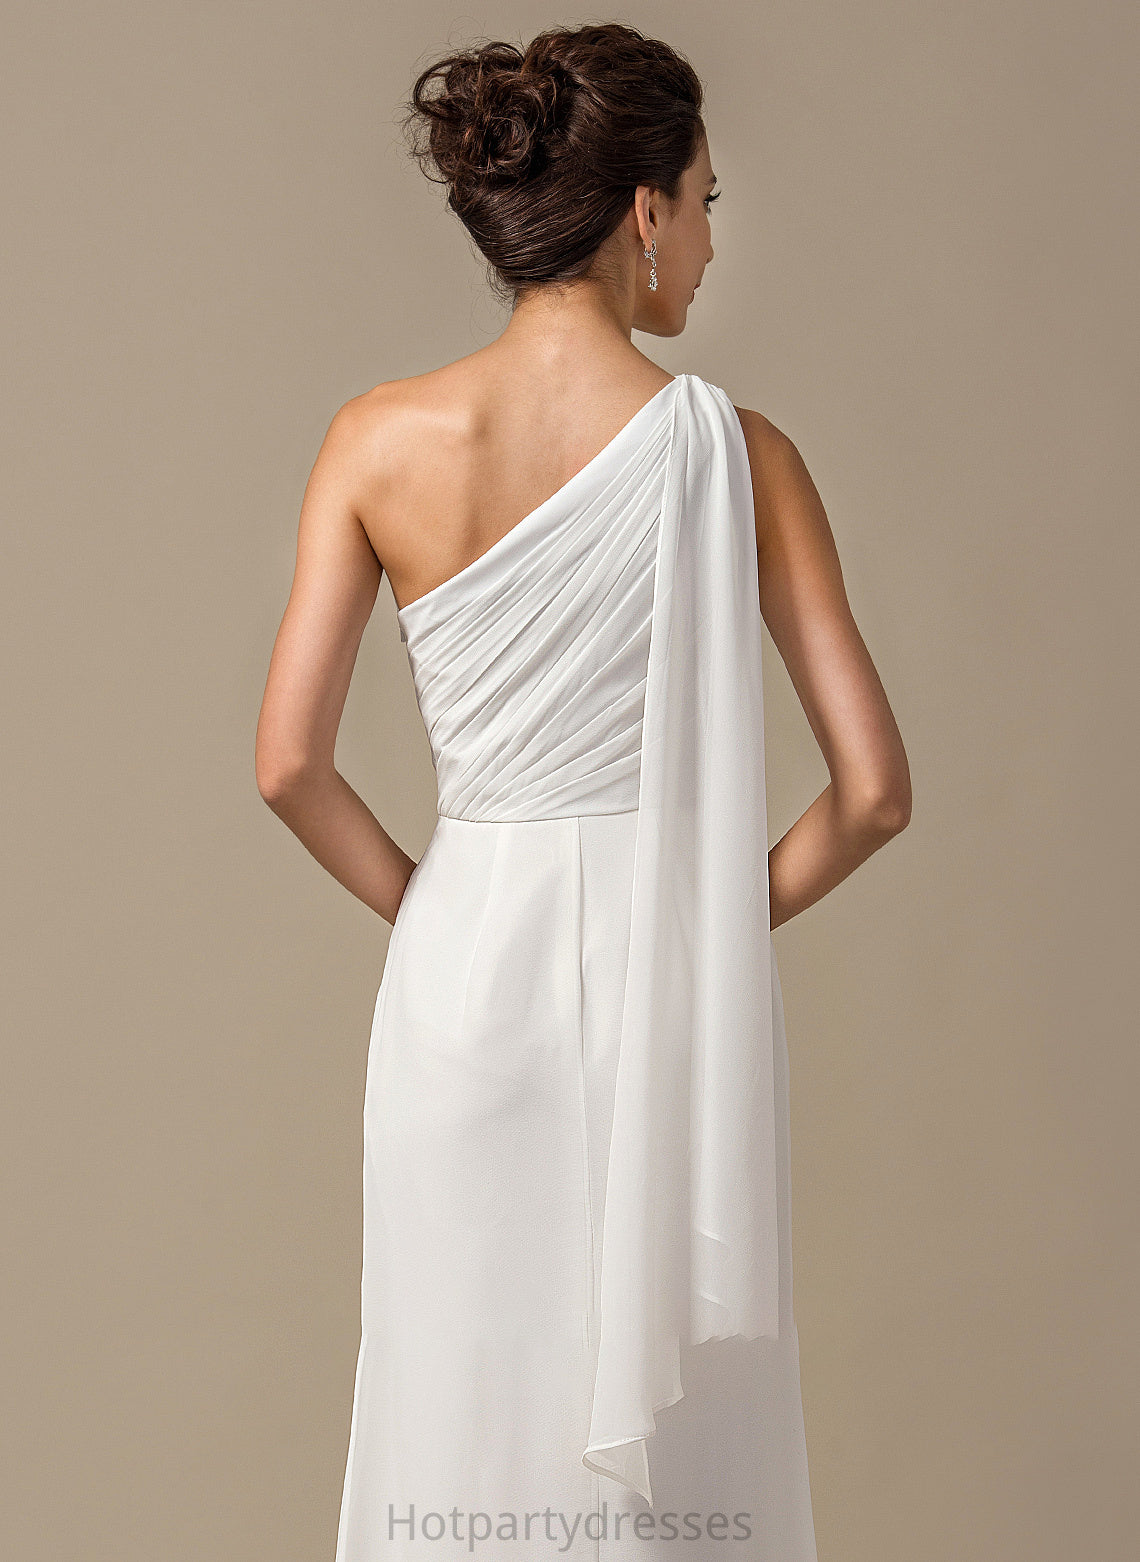 Embellishment Sheath/Column Neckline One-Shoulder Length Ruffle Floor-Length Silhouette Fabric Jacqueline Sleeveless A-Line/Princess Bridesmaid Dresses